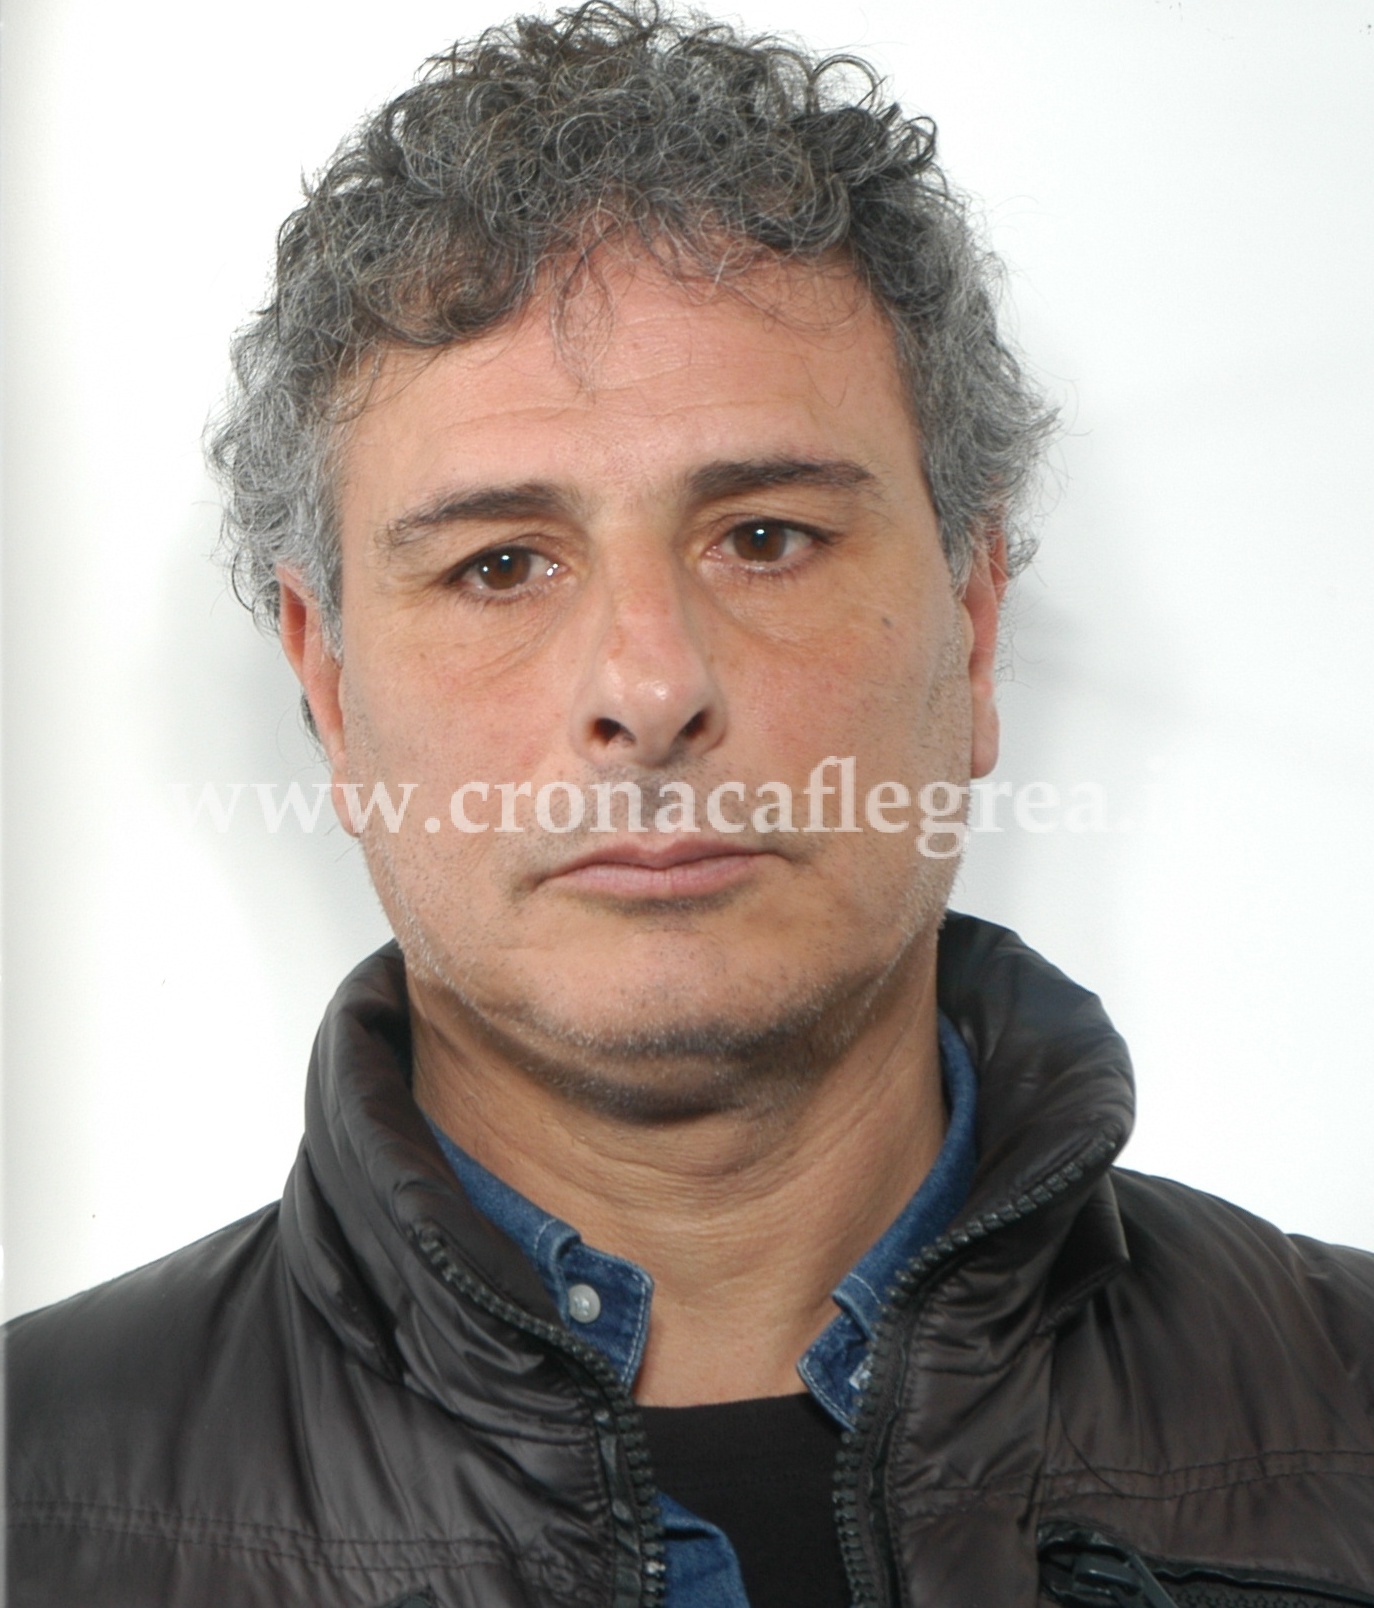 Latitante dopo rapina ed evasione, arrestato Bruno Savorra